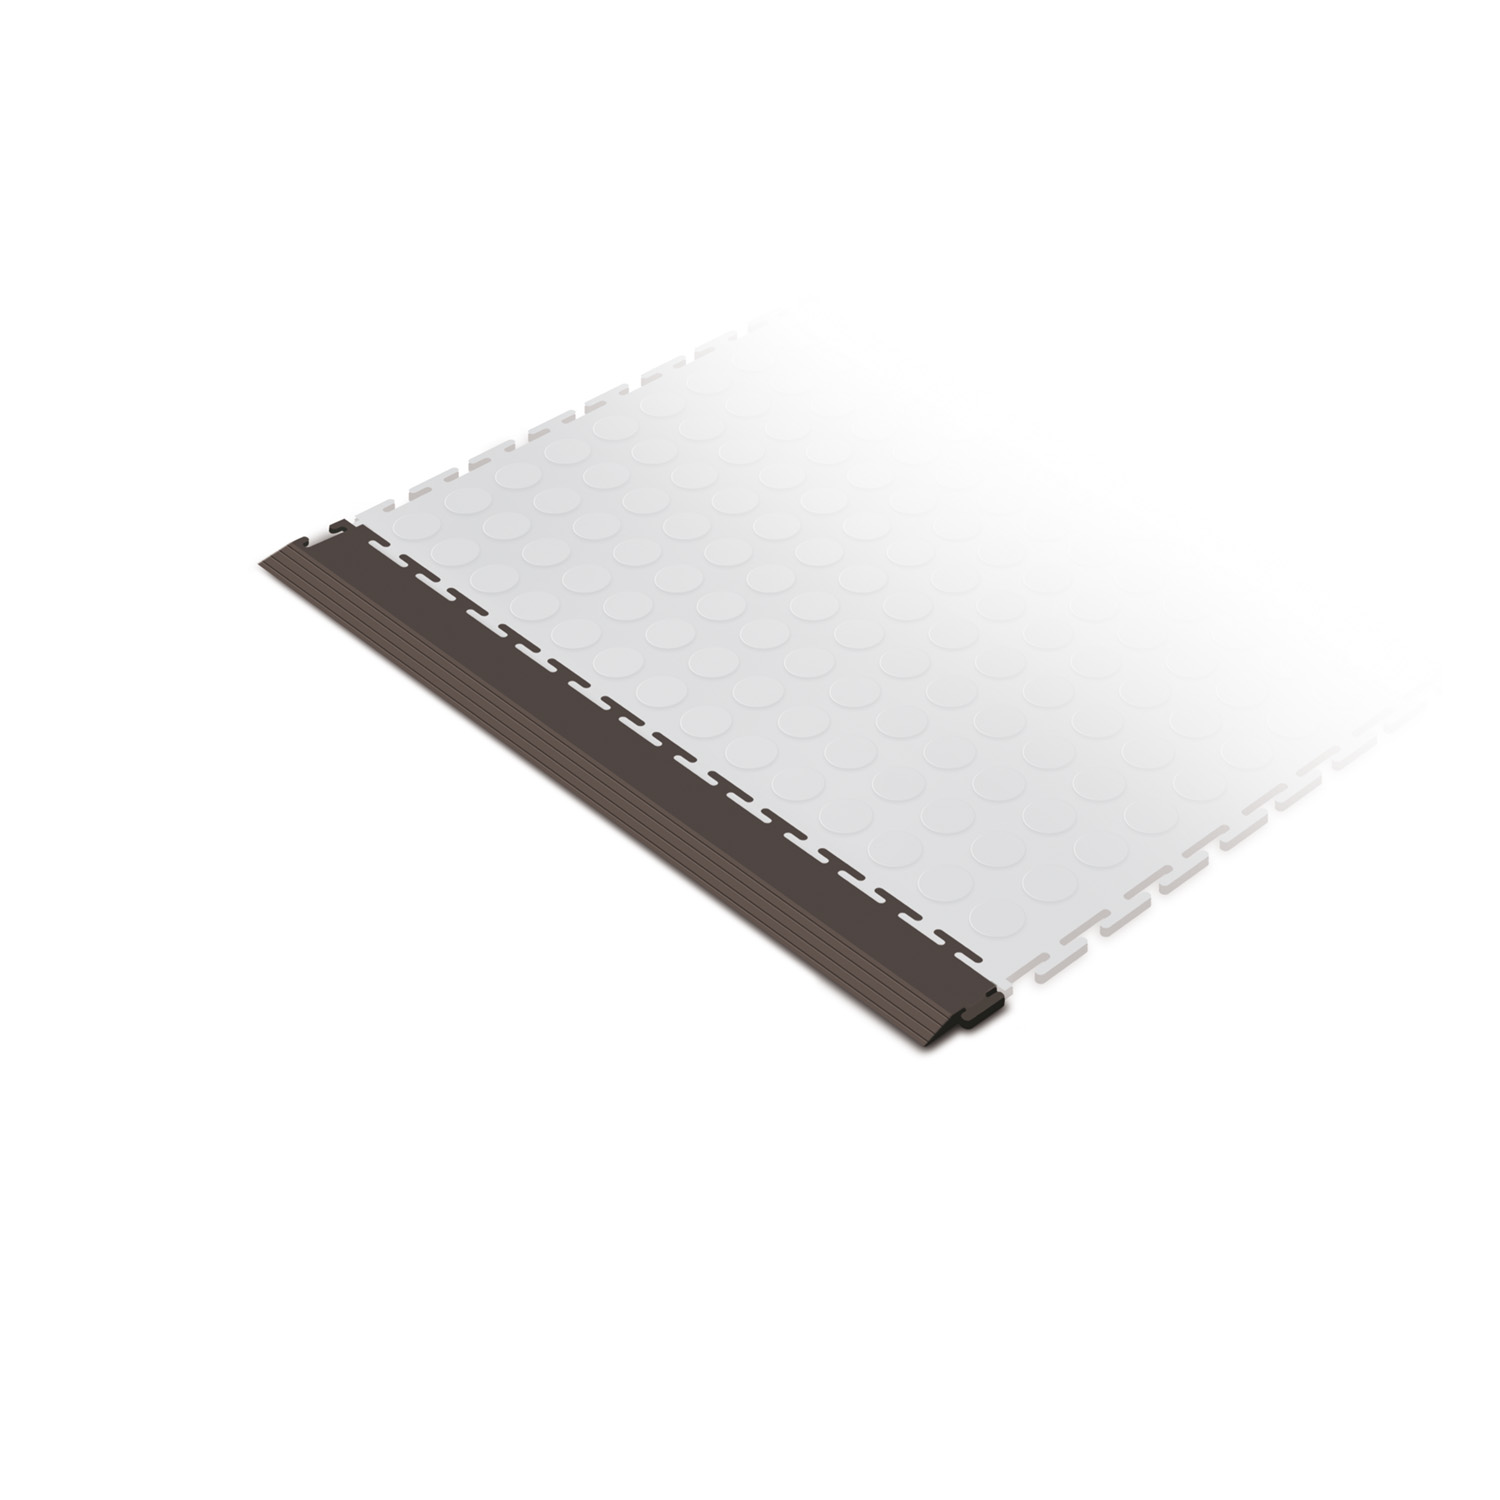 Heavy-duty edge ramp tile (black)